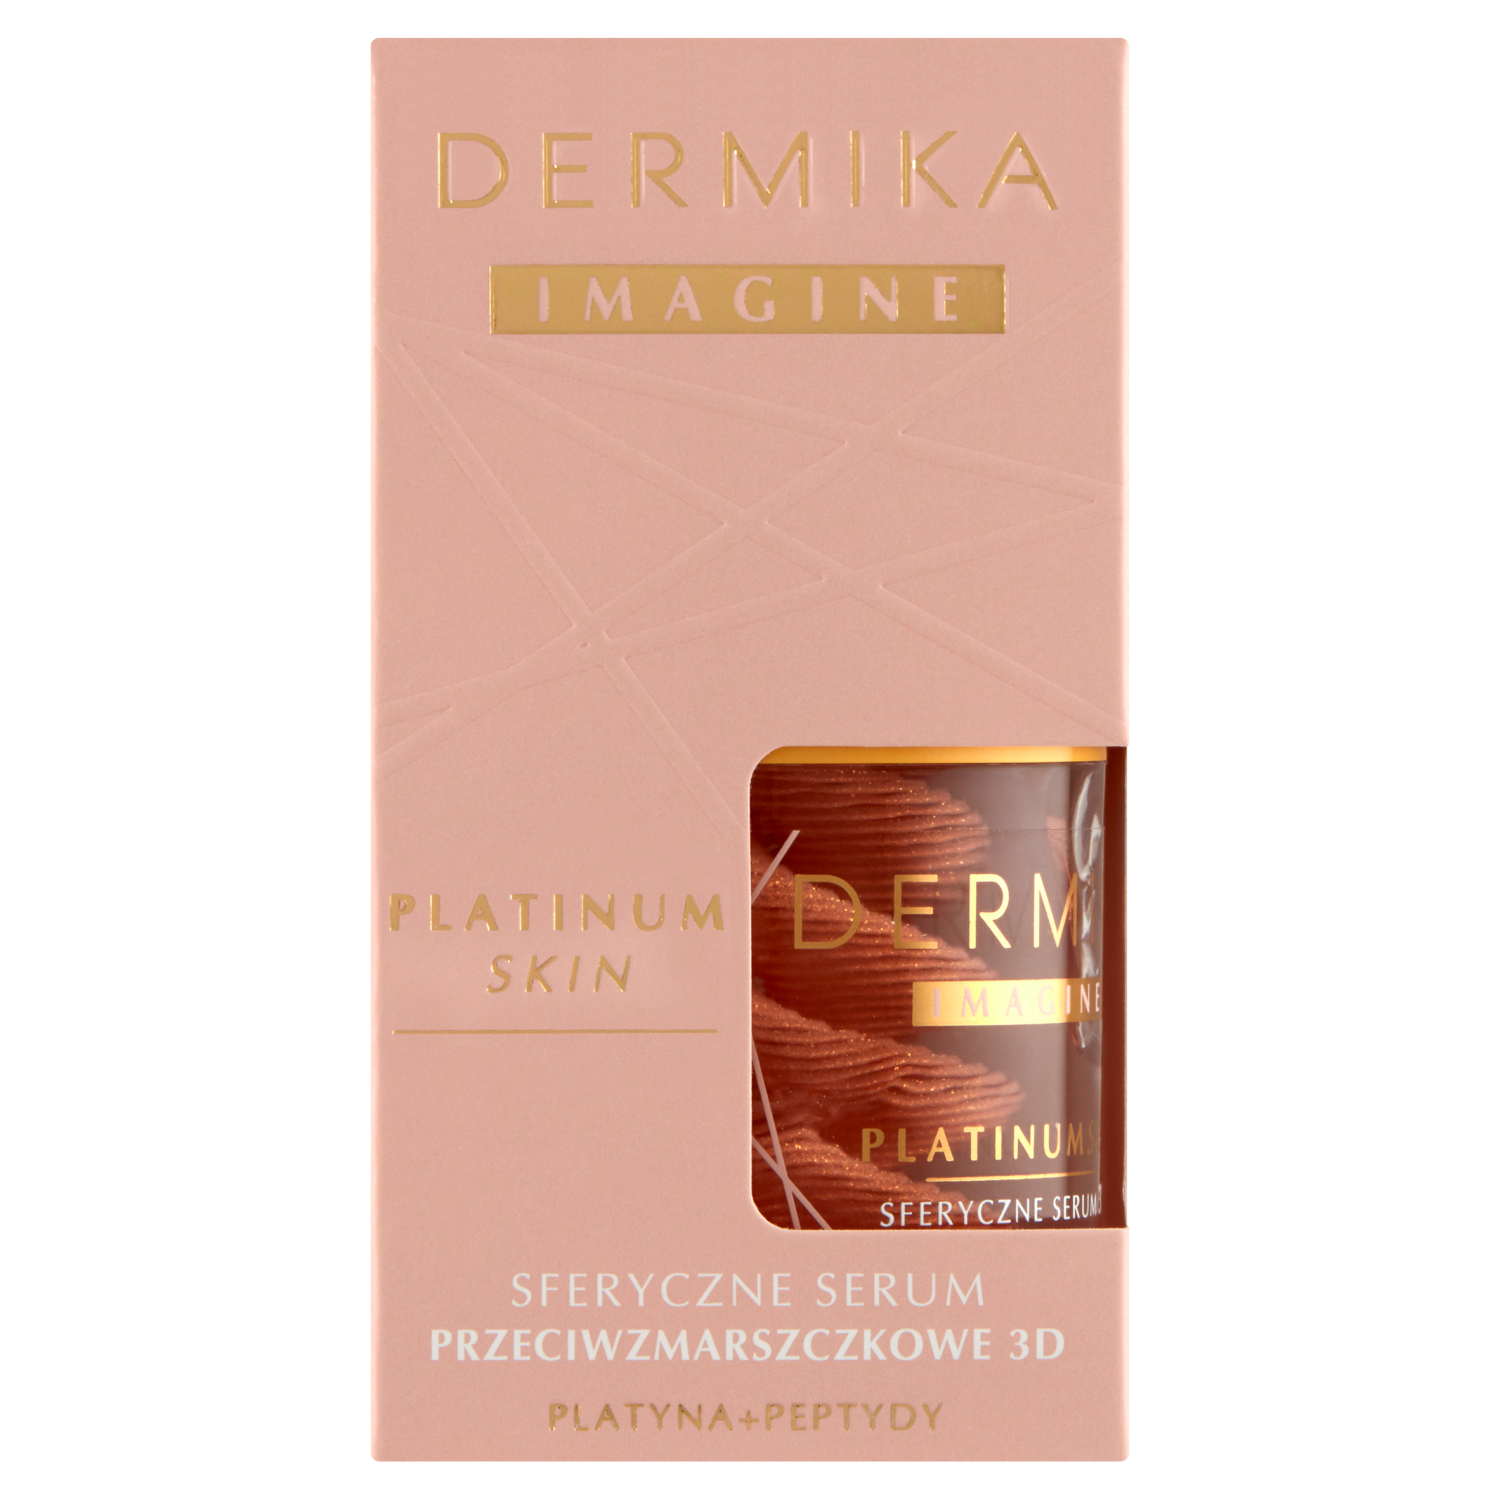 Dermika Imagine Platinum Skin Сыворотка для лица Spherical 3D против морщин, 60 г